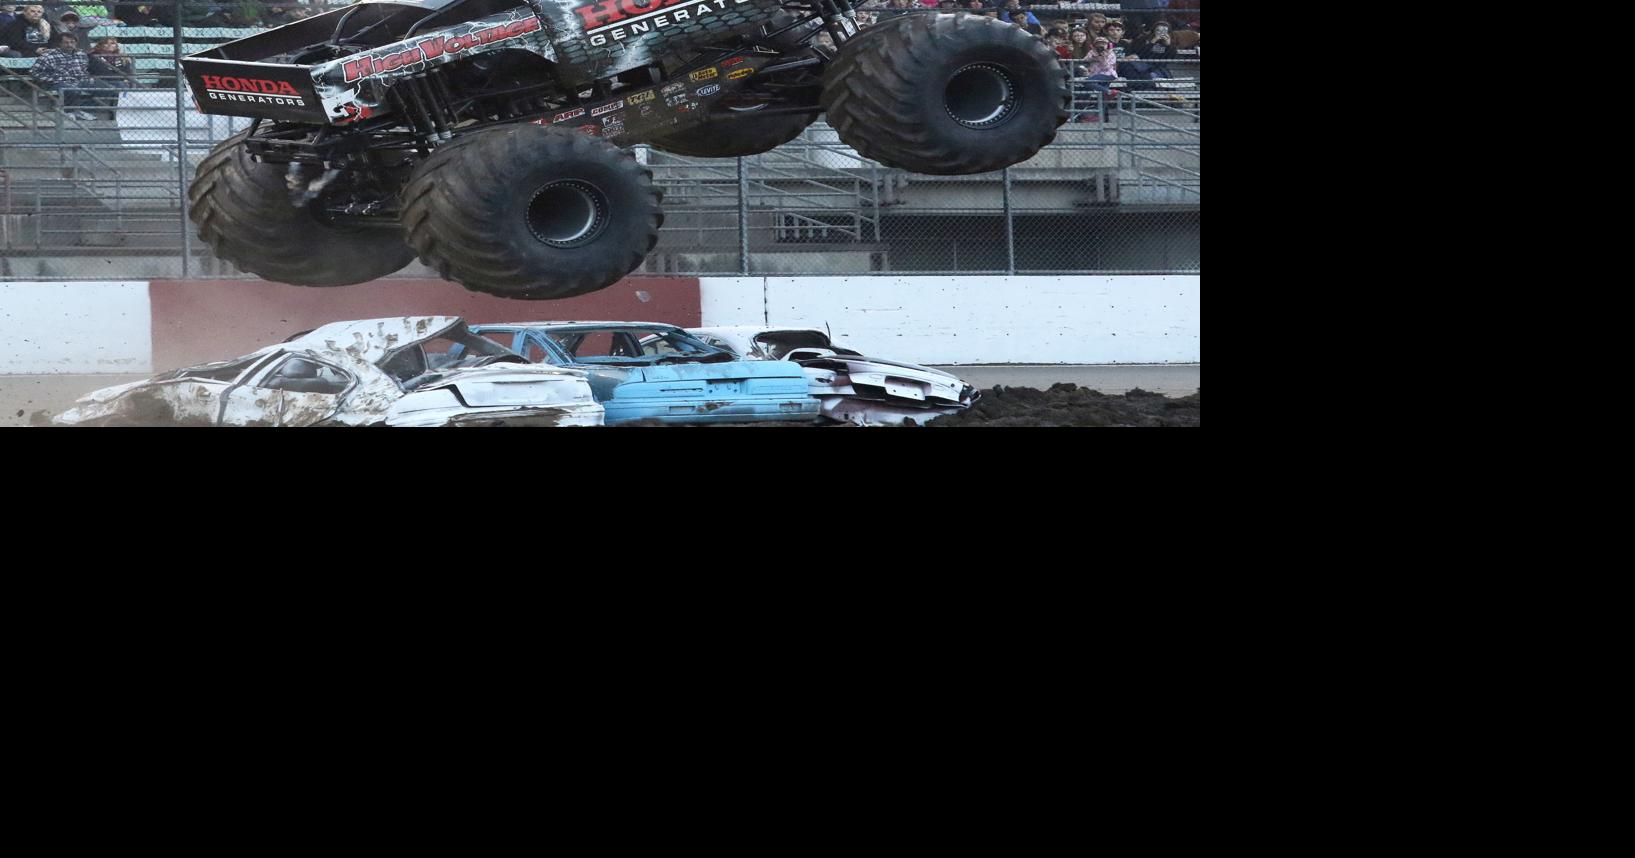 Mechanical mayhem: Monster Truck Nitro Tour heads to Southern Oregon  Speedway, Go Rogue